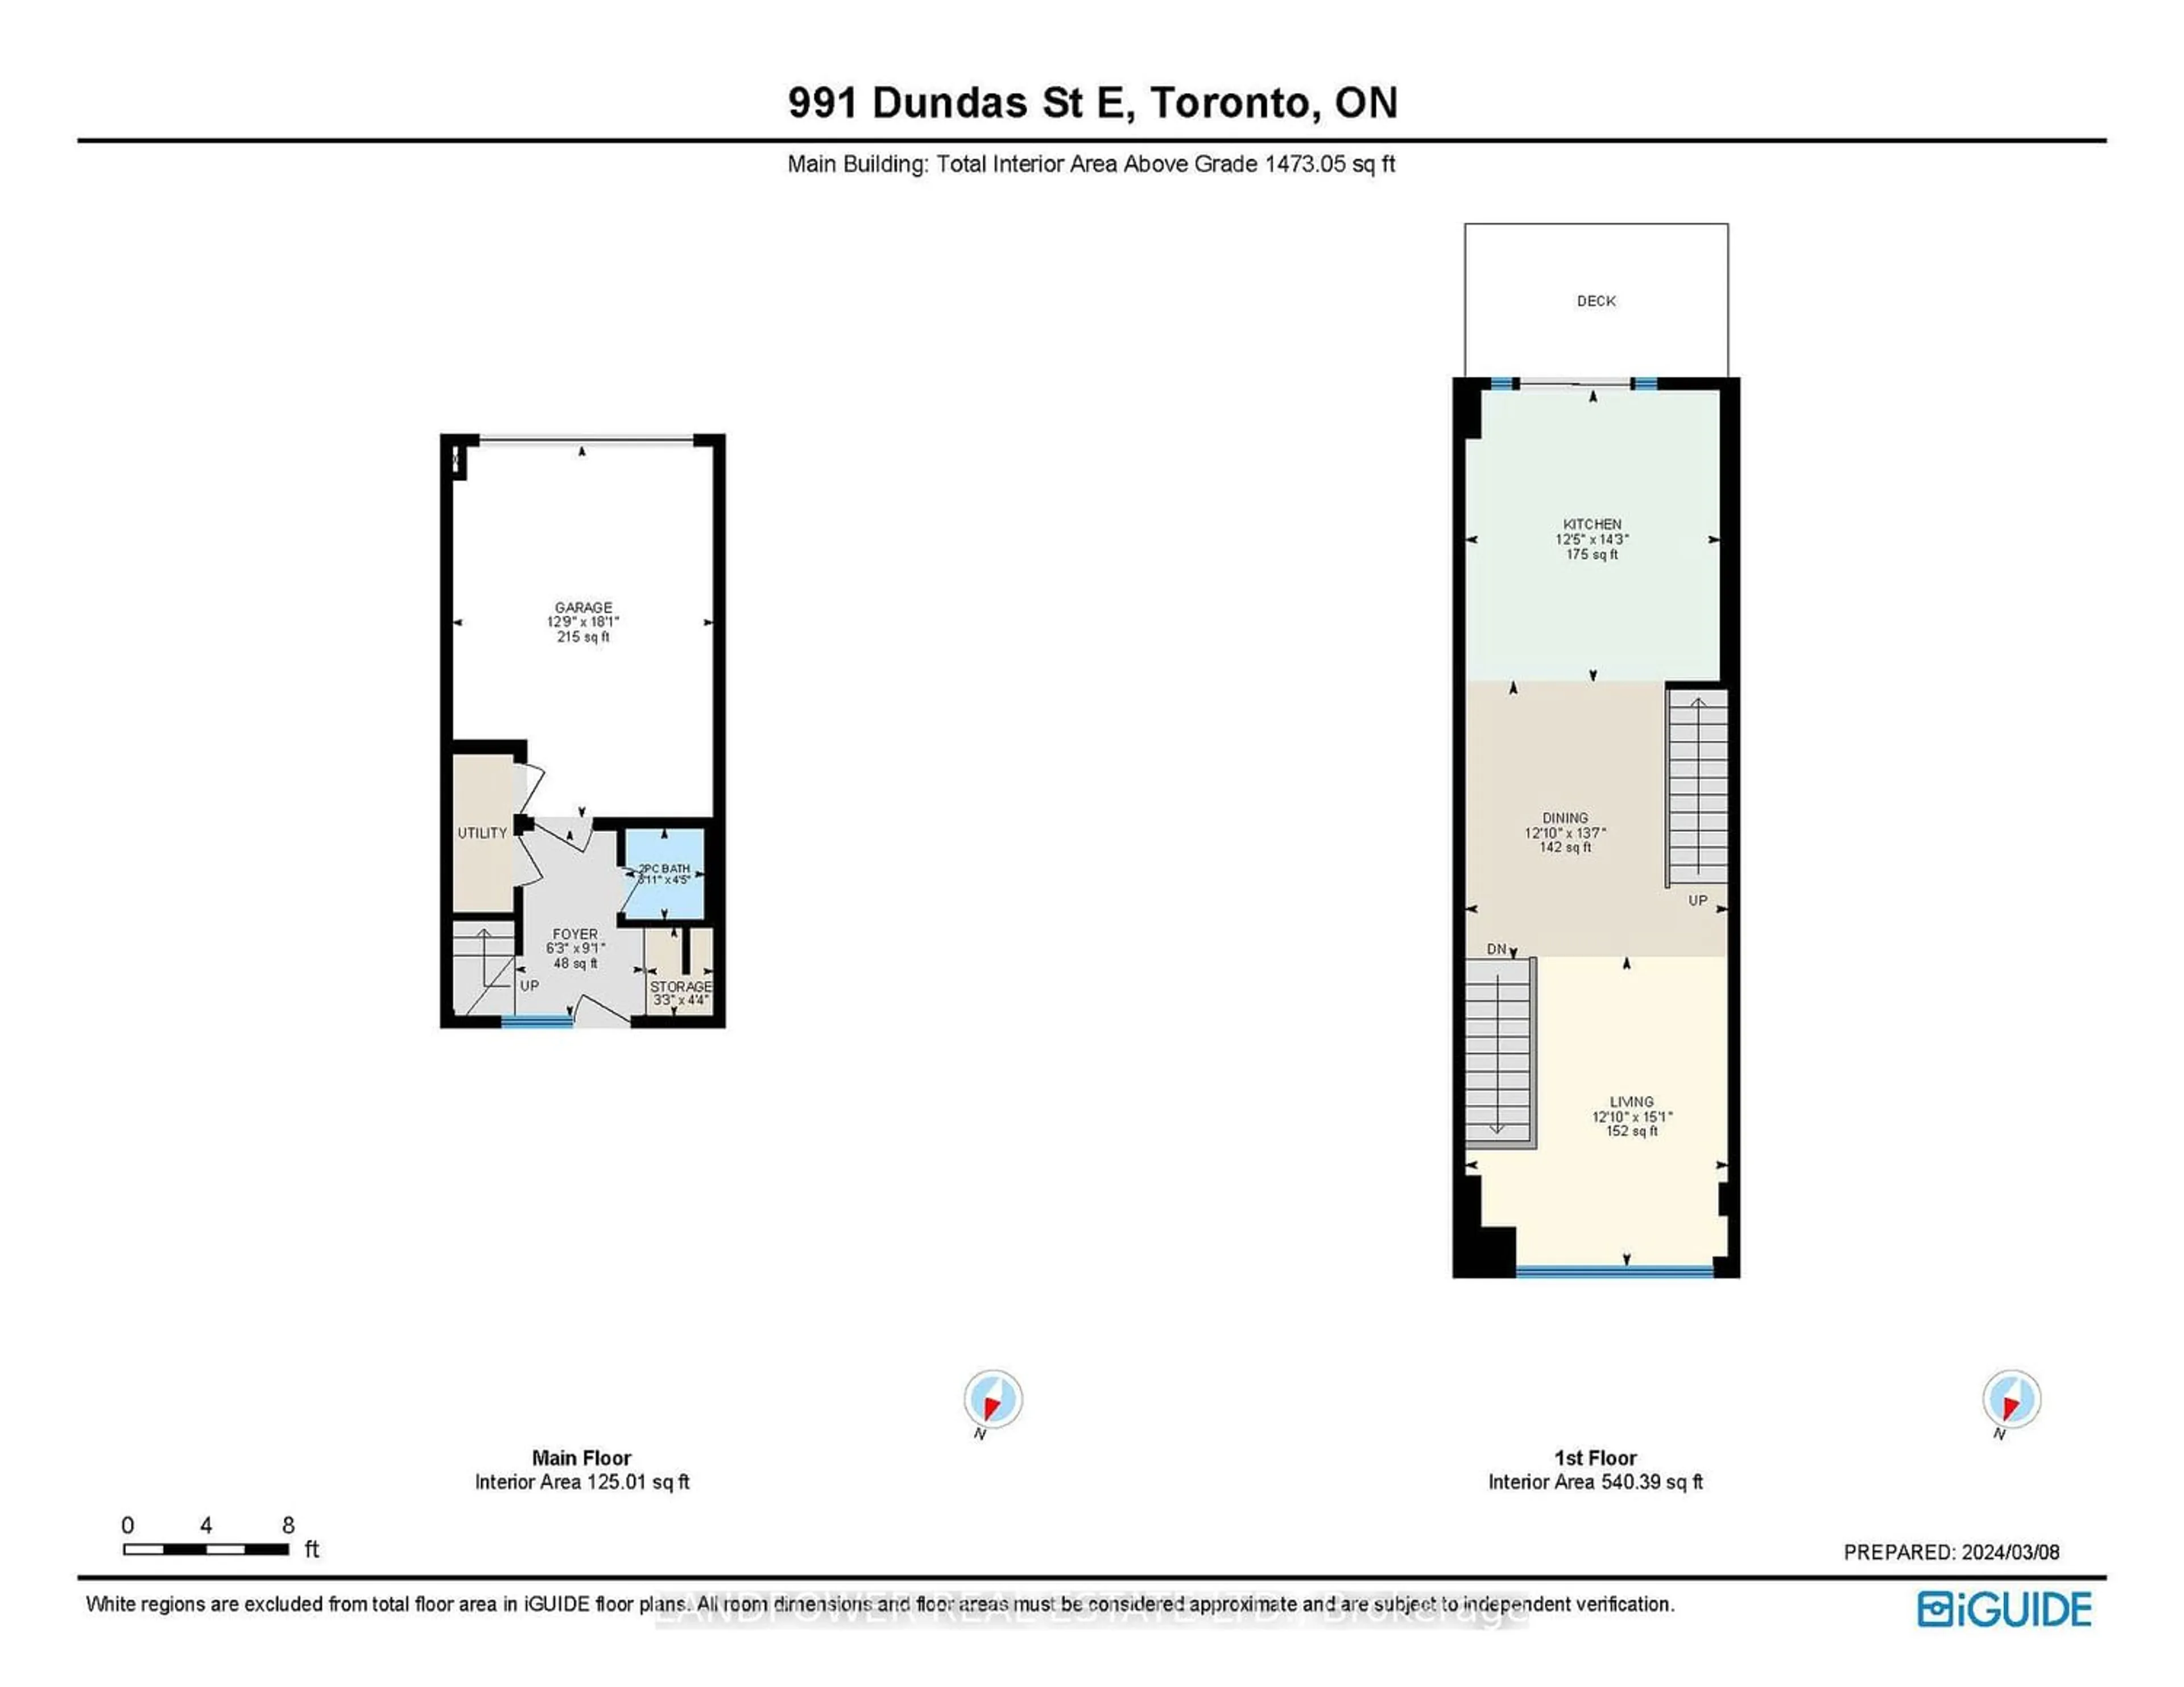 Floor plan for 991 Dundas St, Toronto Ontario M4M 1R6